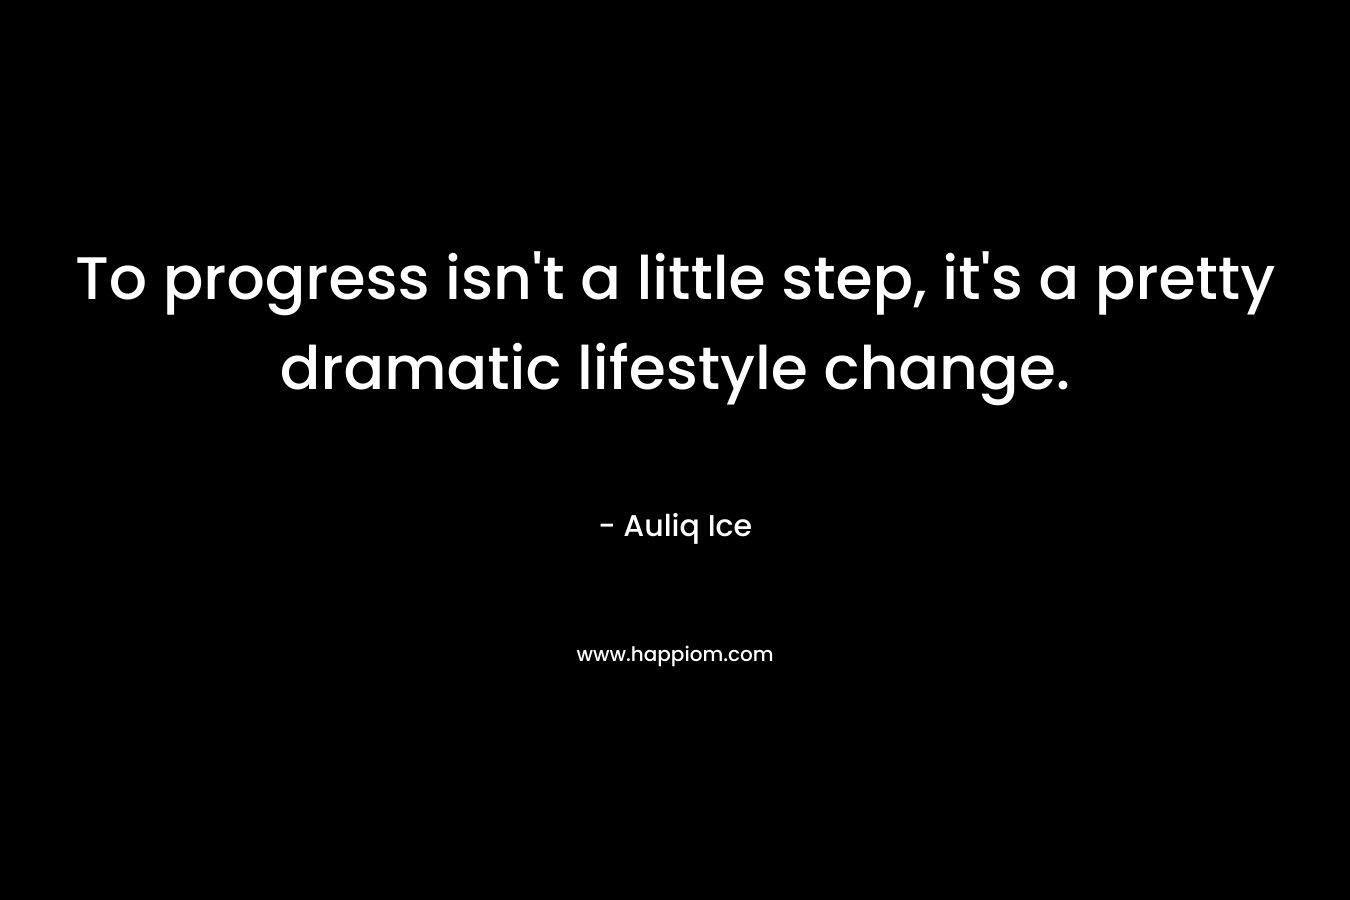 To progress isn't a little step, it's a pretty dramatic lifestyle change.